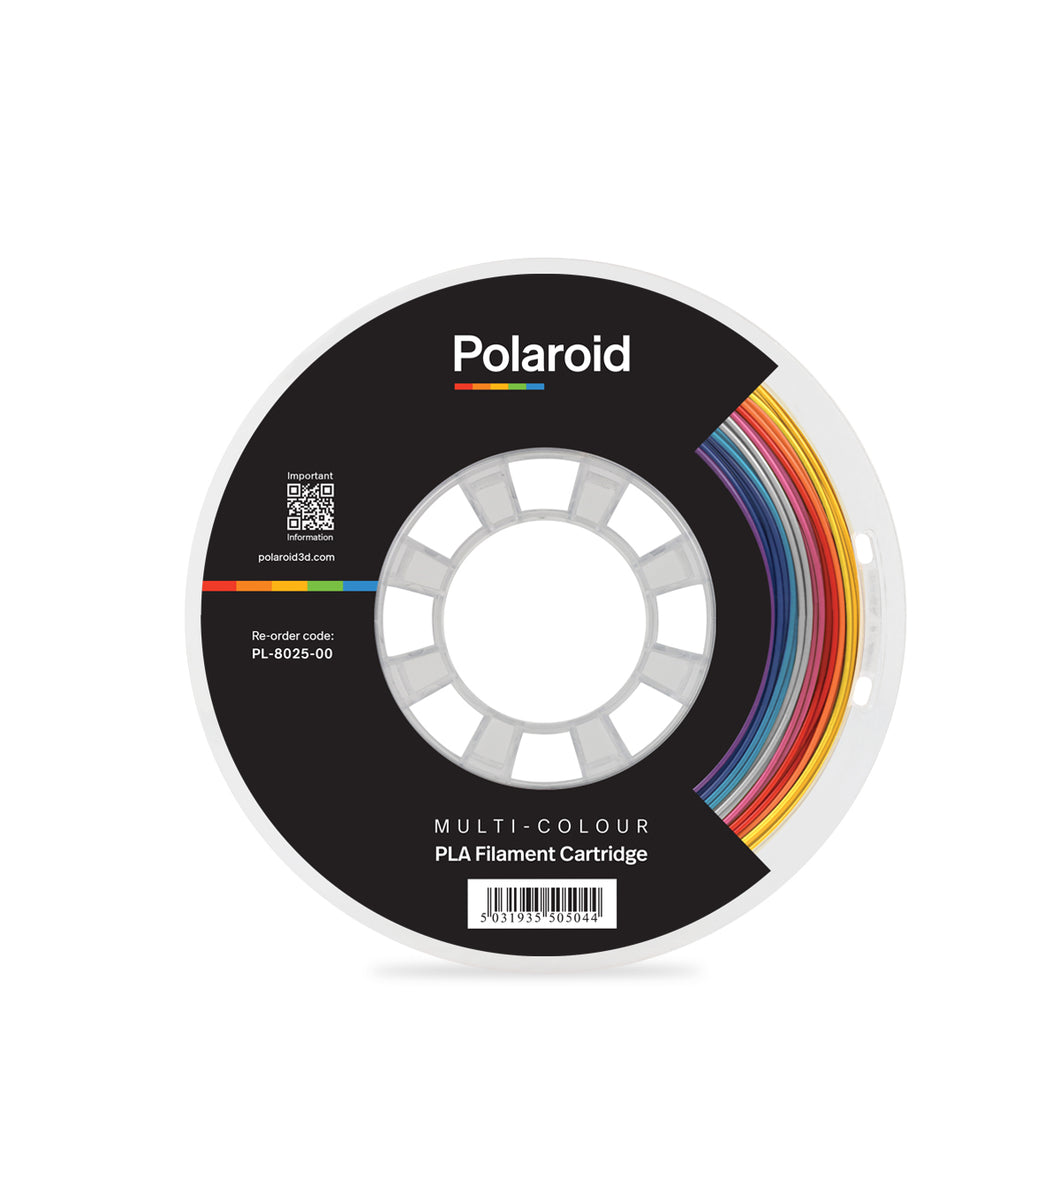 Polaroid 3D 500g Universell Premium PLA Filament Material Mehrfarbig